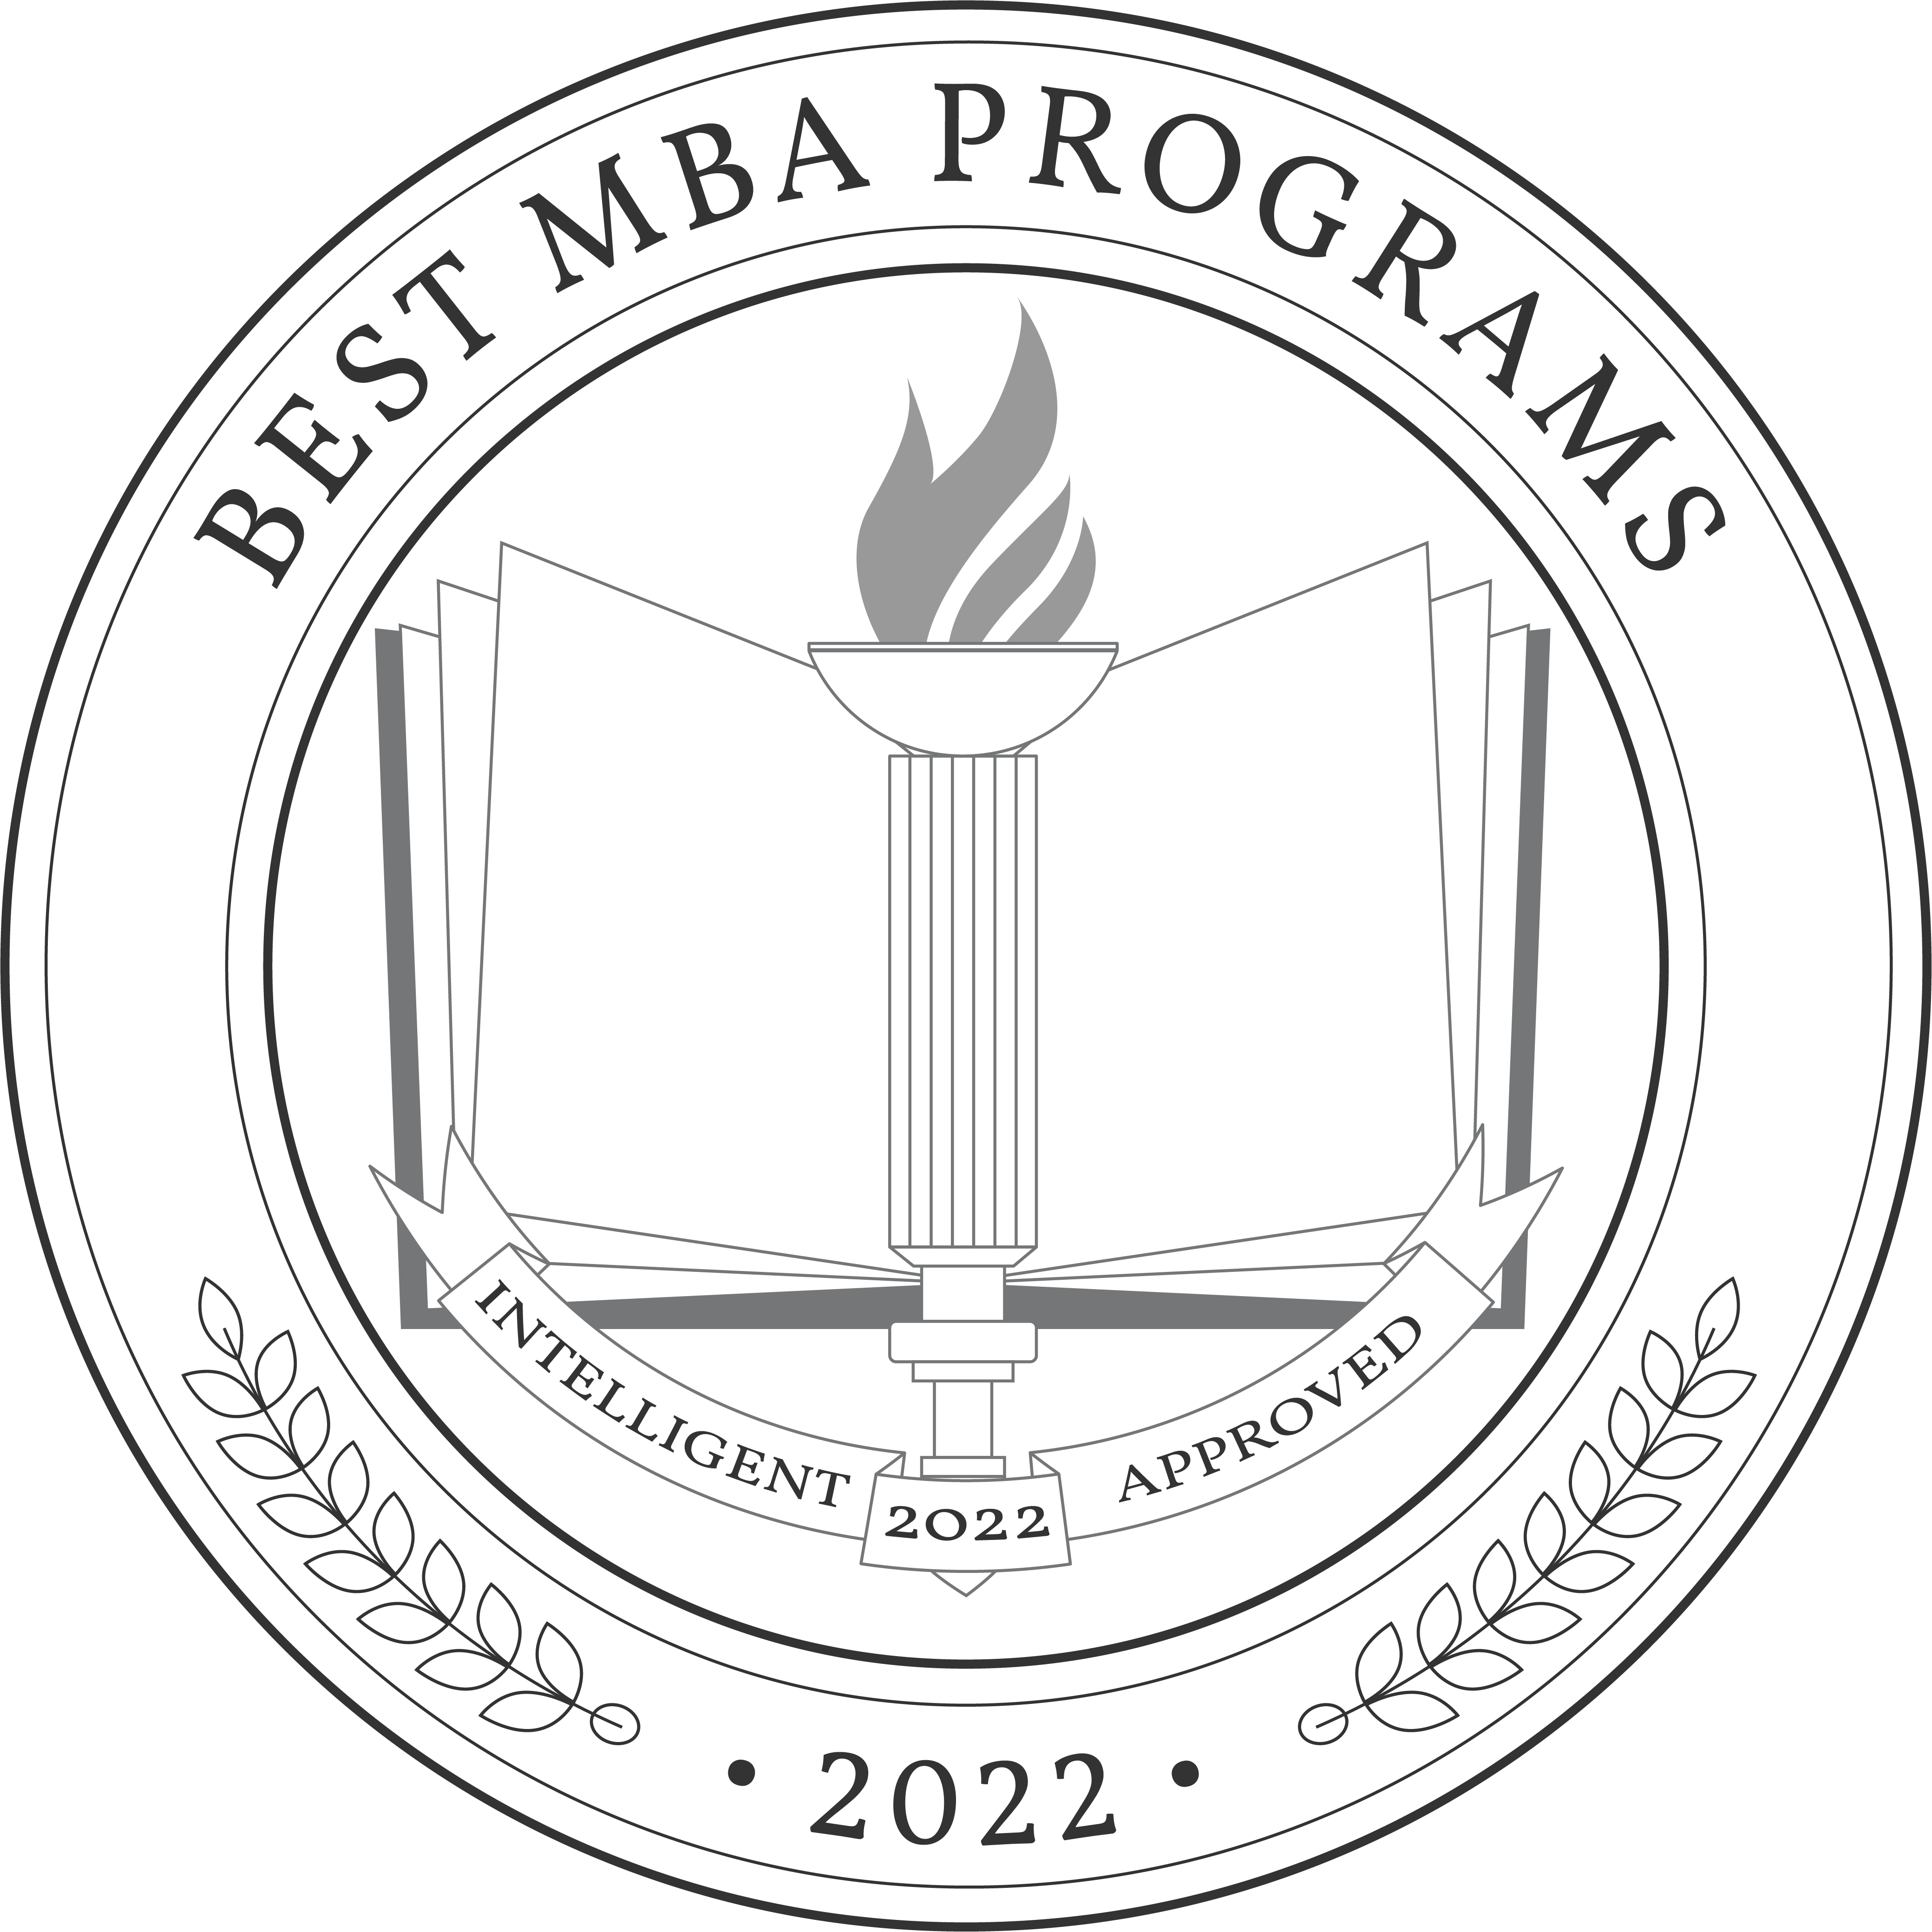 Best-MBA-Programs-Badge.png